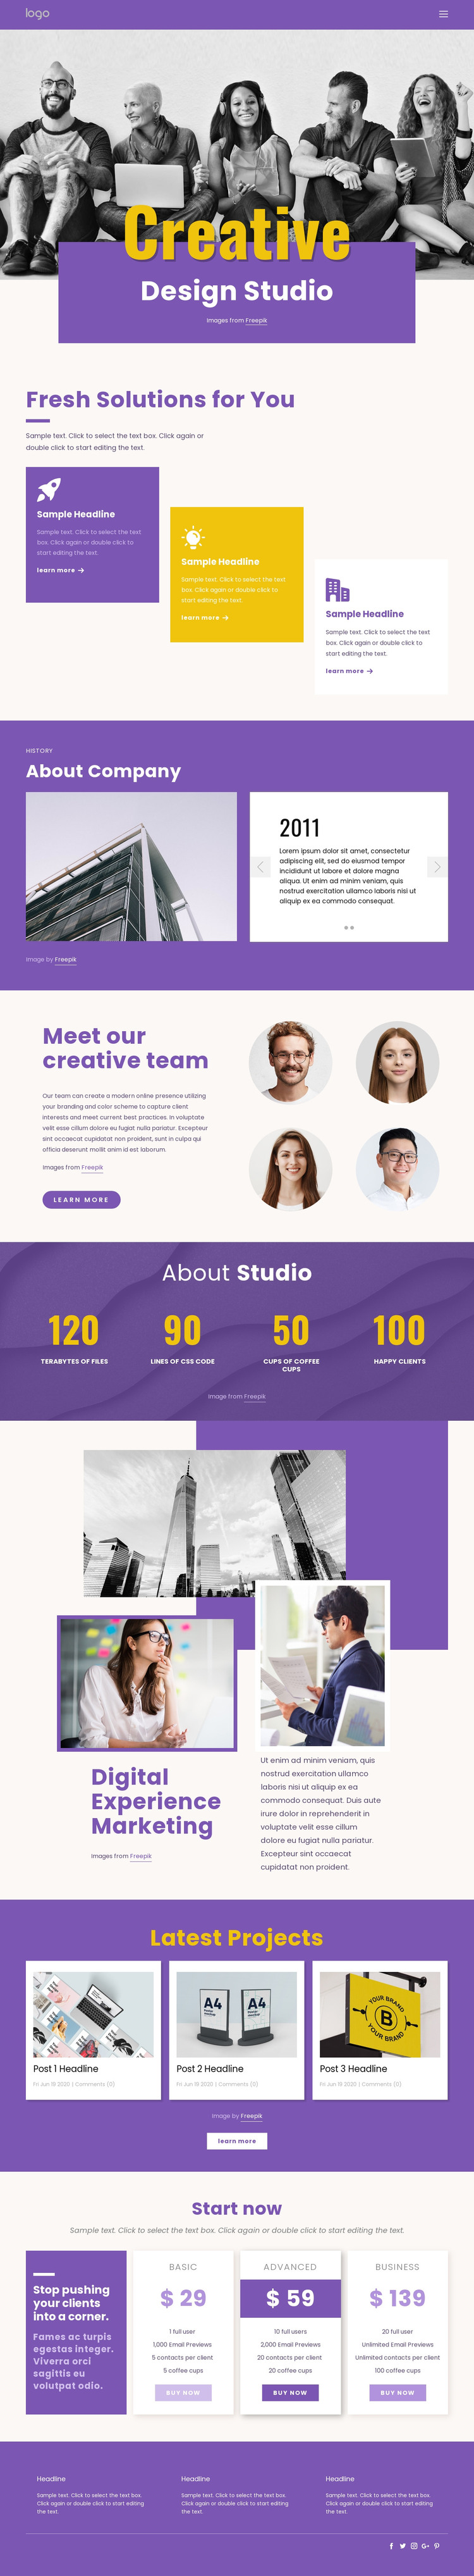 We are creative branding professionals Homepage Design